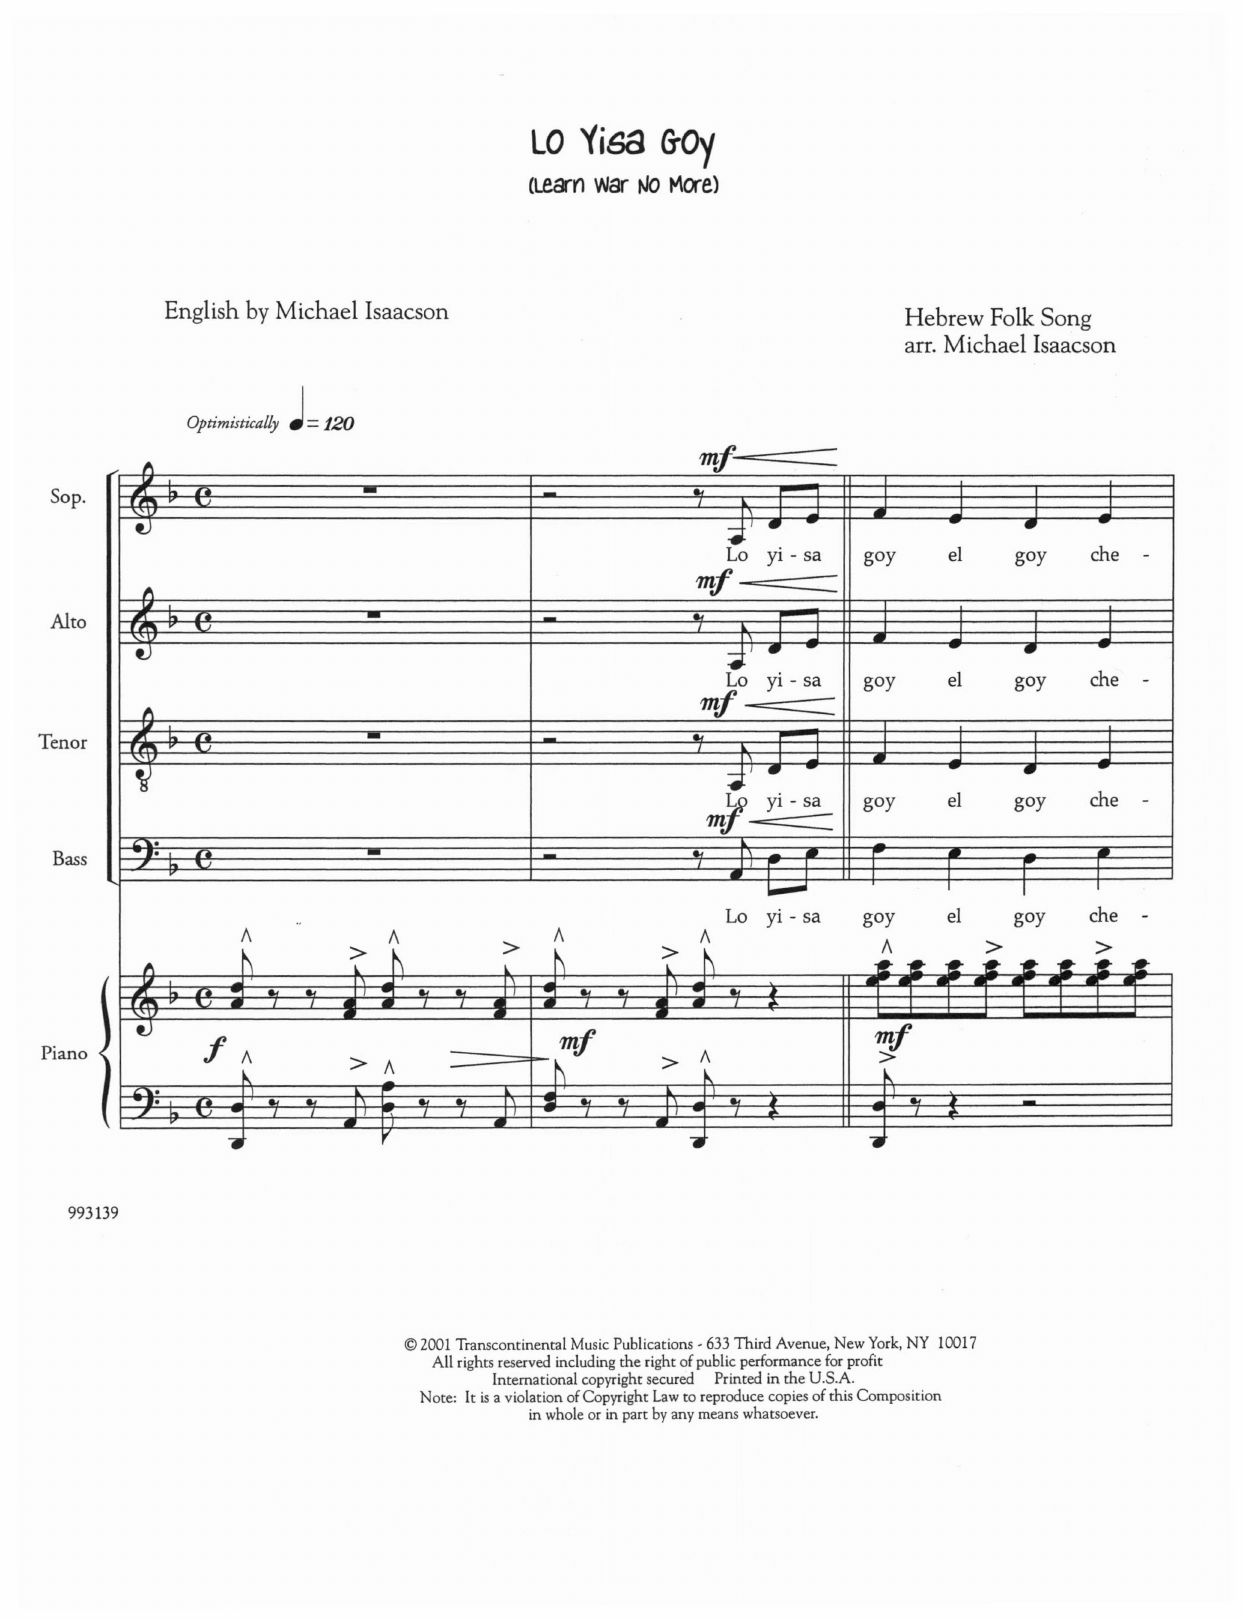 Michael Isaacson Lo Yisa Goy (Learn War No More) Sheet Music Notes & Chords for SATB - Download or Print PDF